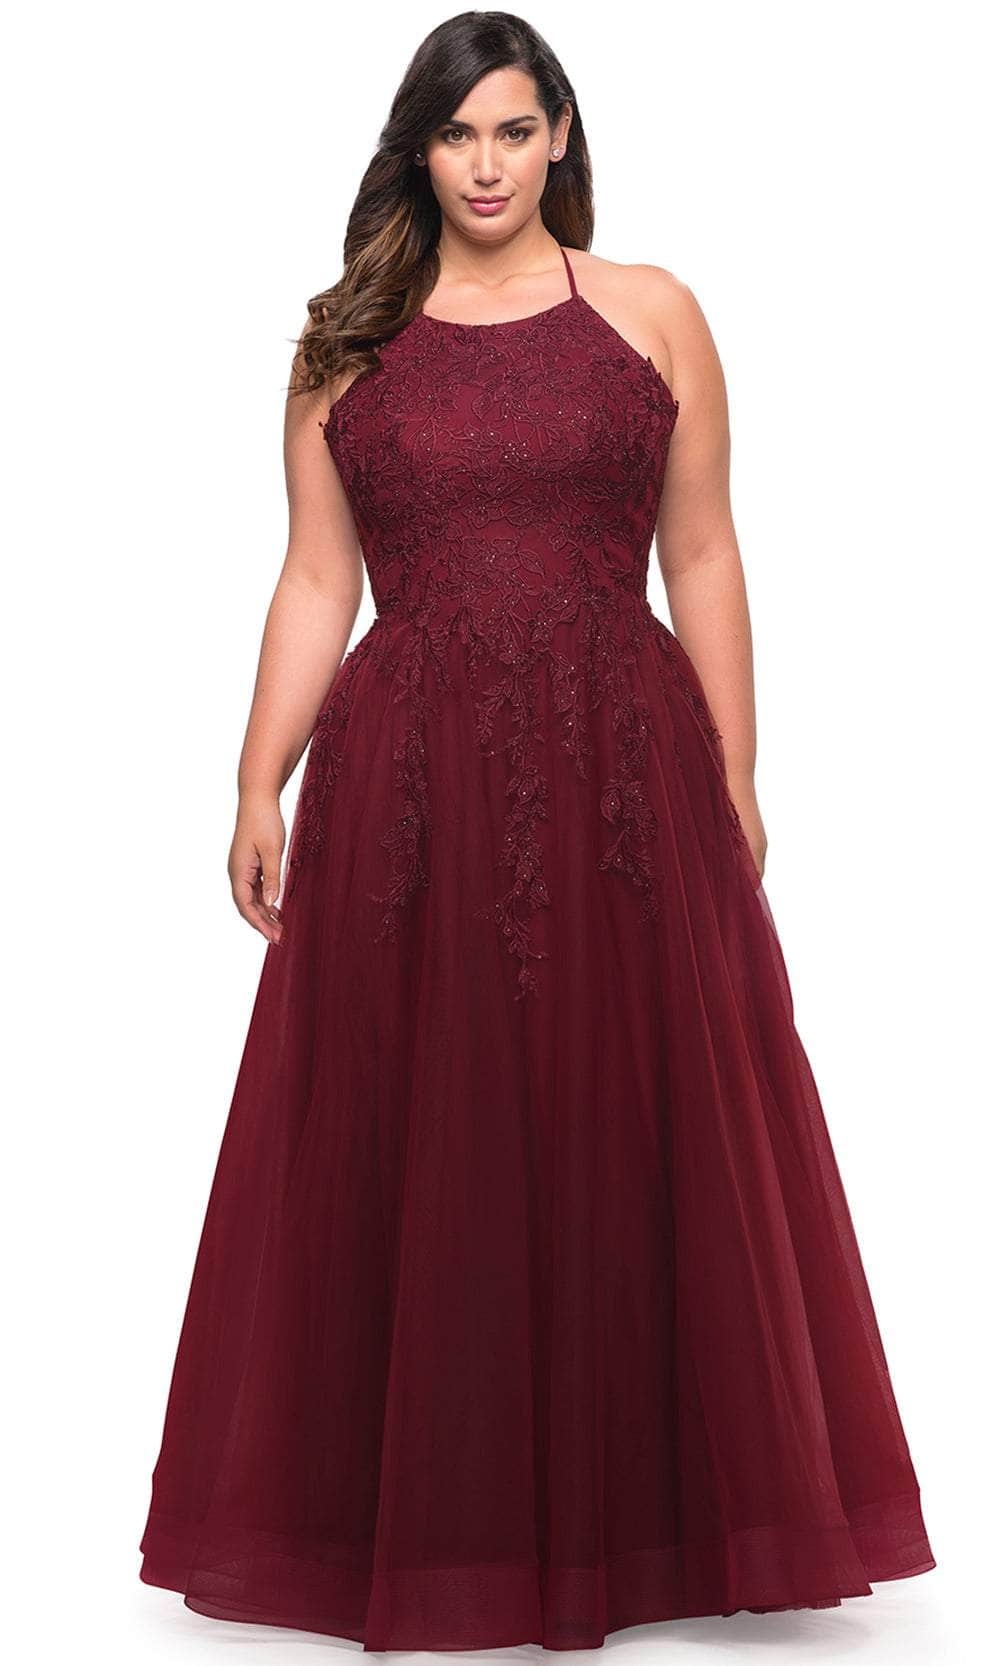 La Femme 29071 - Halter Beaded Ballgown Special Occasion Dress 12W / Wine